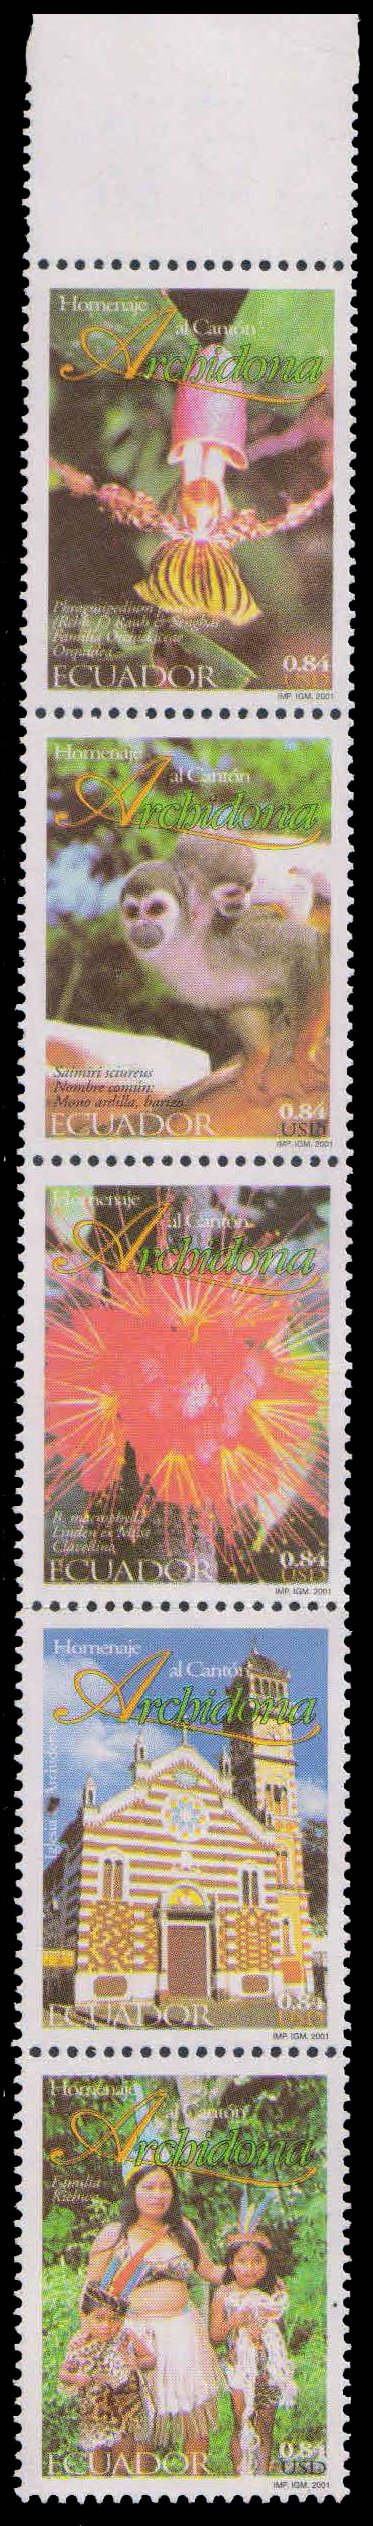 ECUADOR 2001-Archidona Canton, Napo Province, Flower, Animal, People, Church, Set of 5, MNH, S.G. 2481-85-Cat � 42.50